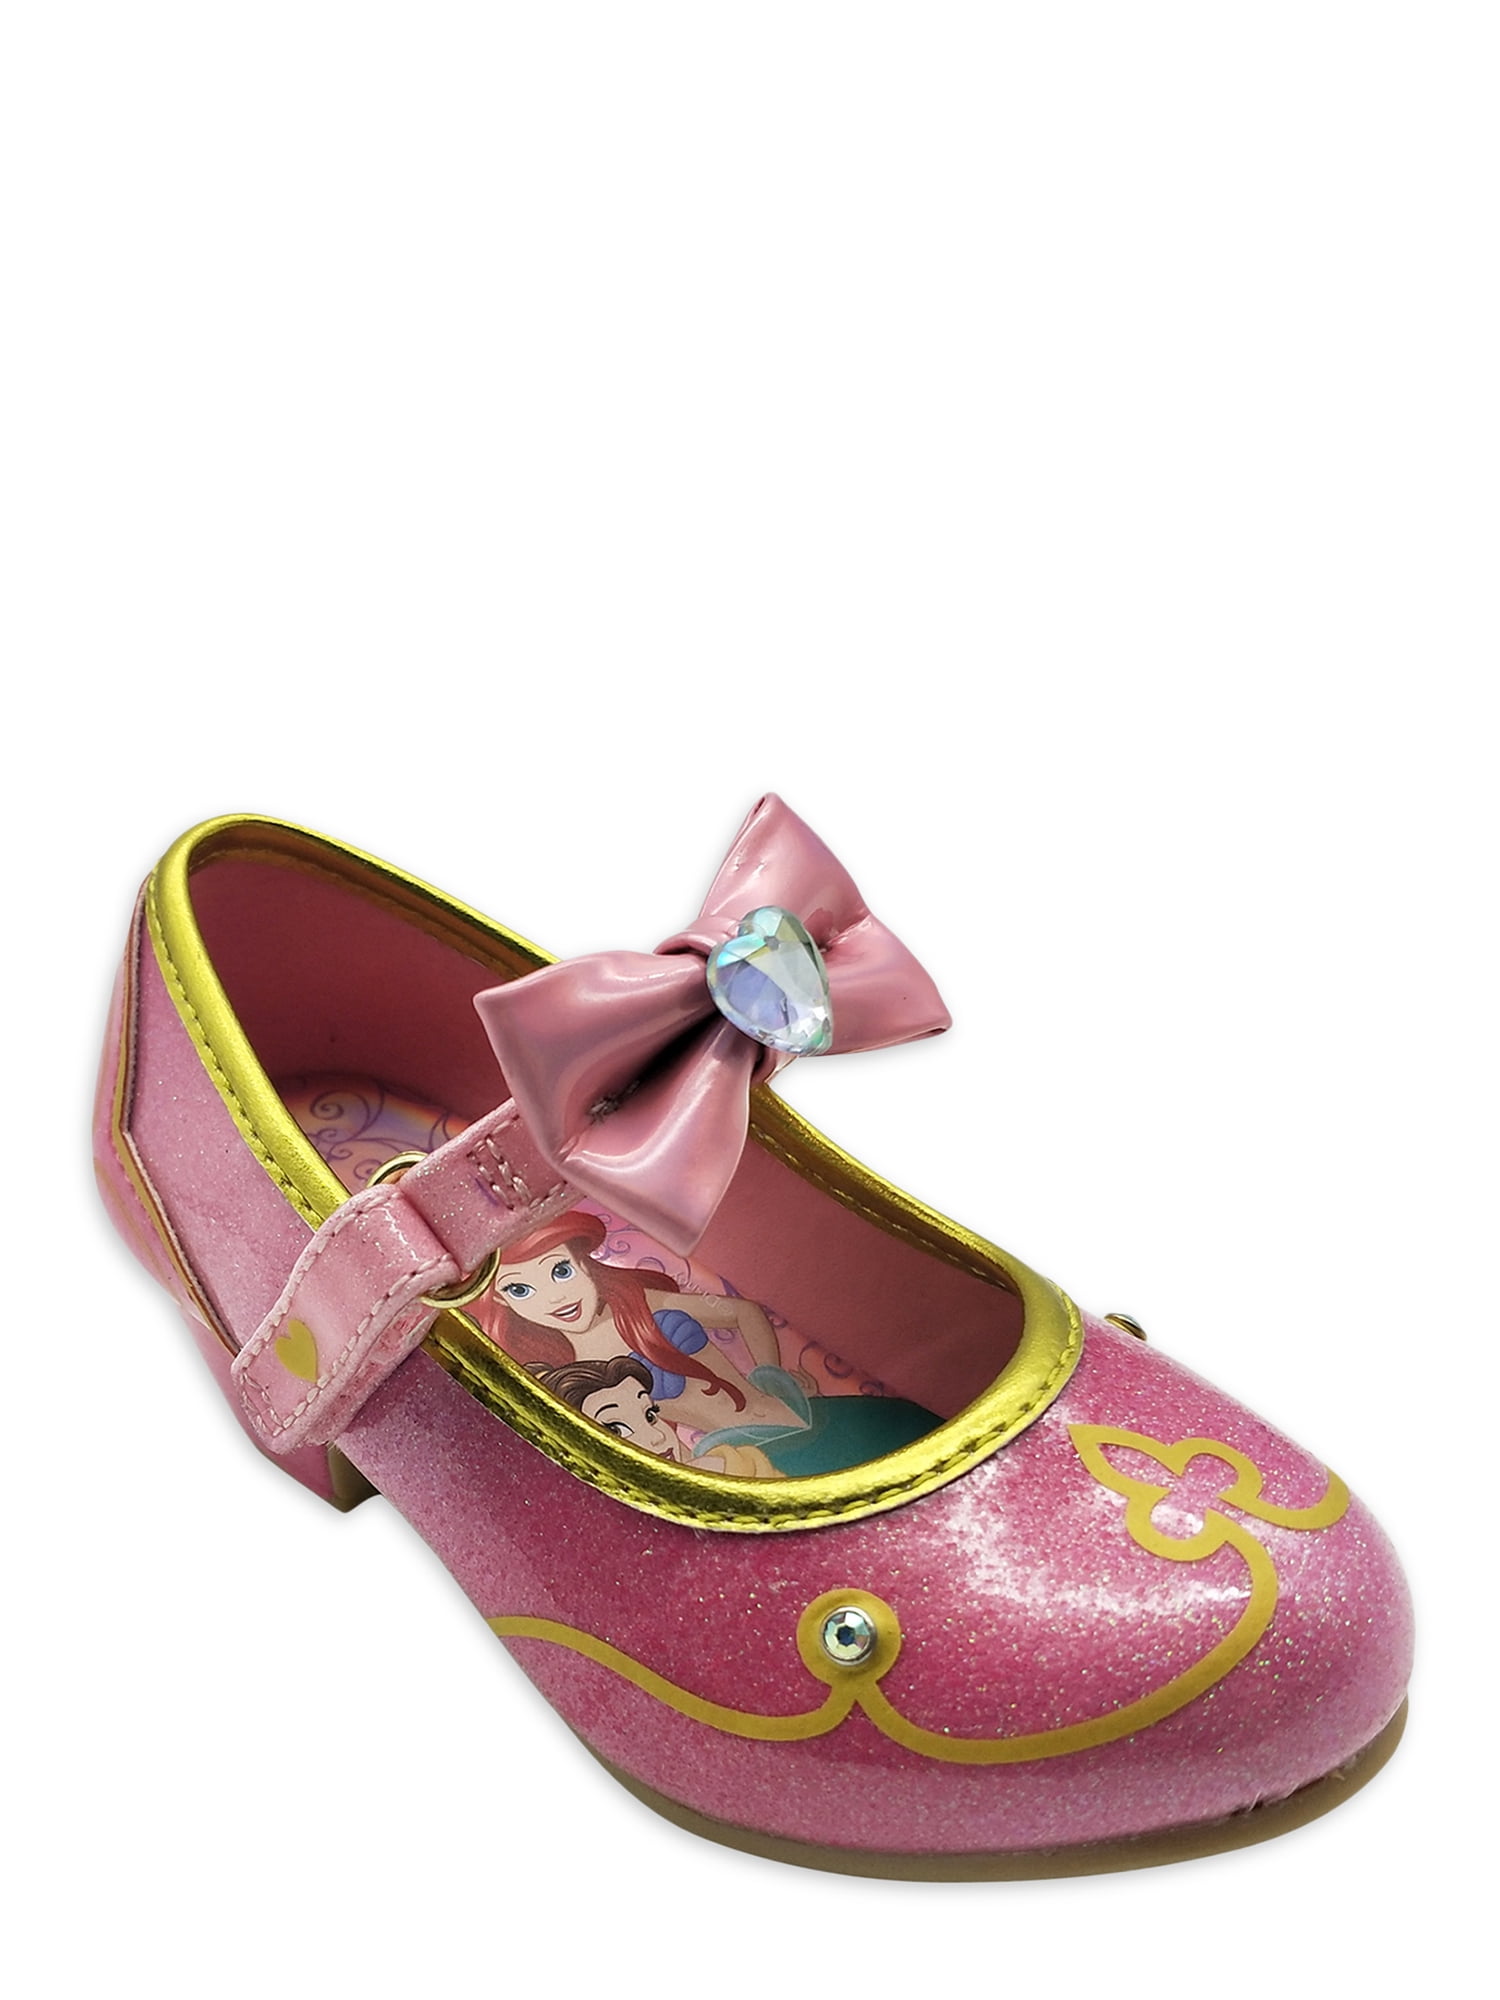 Disney Princess Toddler Girls' High Heels Shoes Size 9 